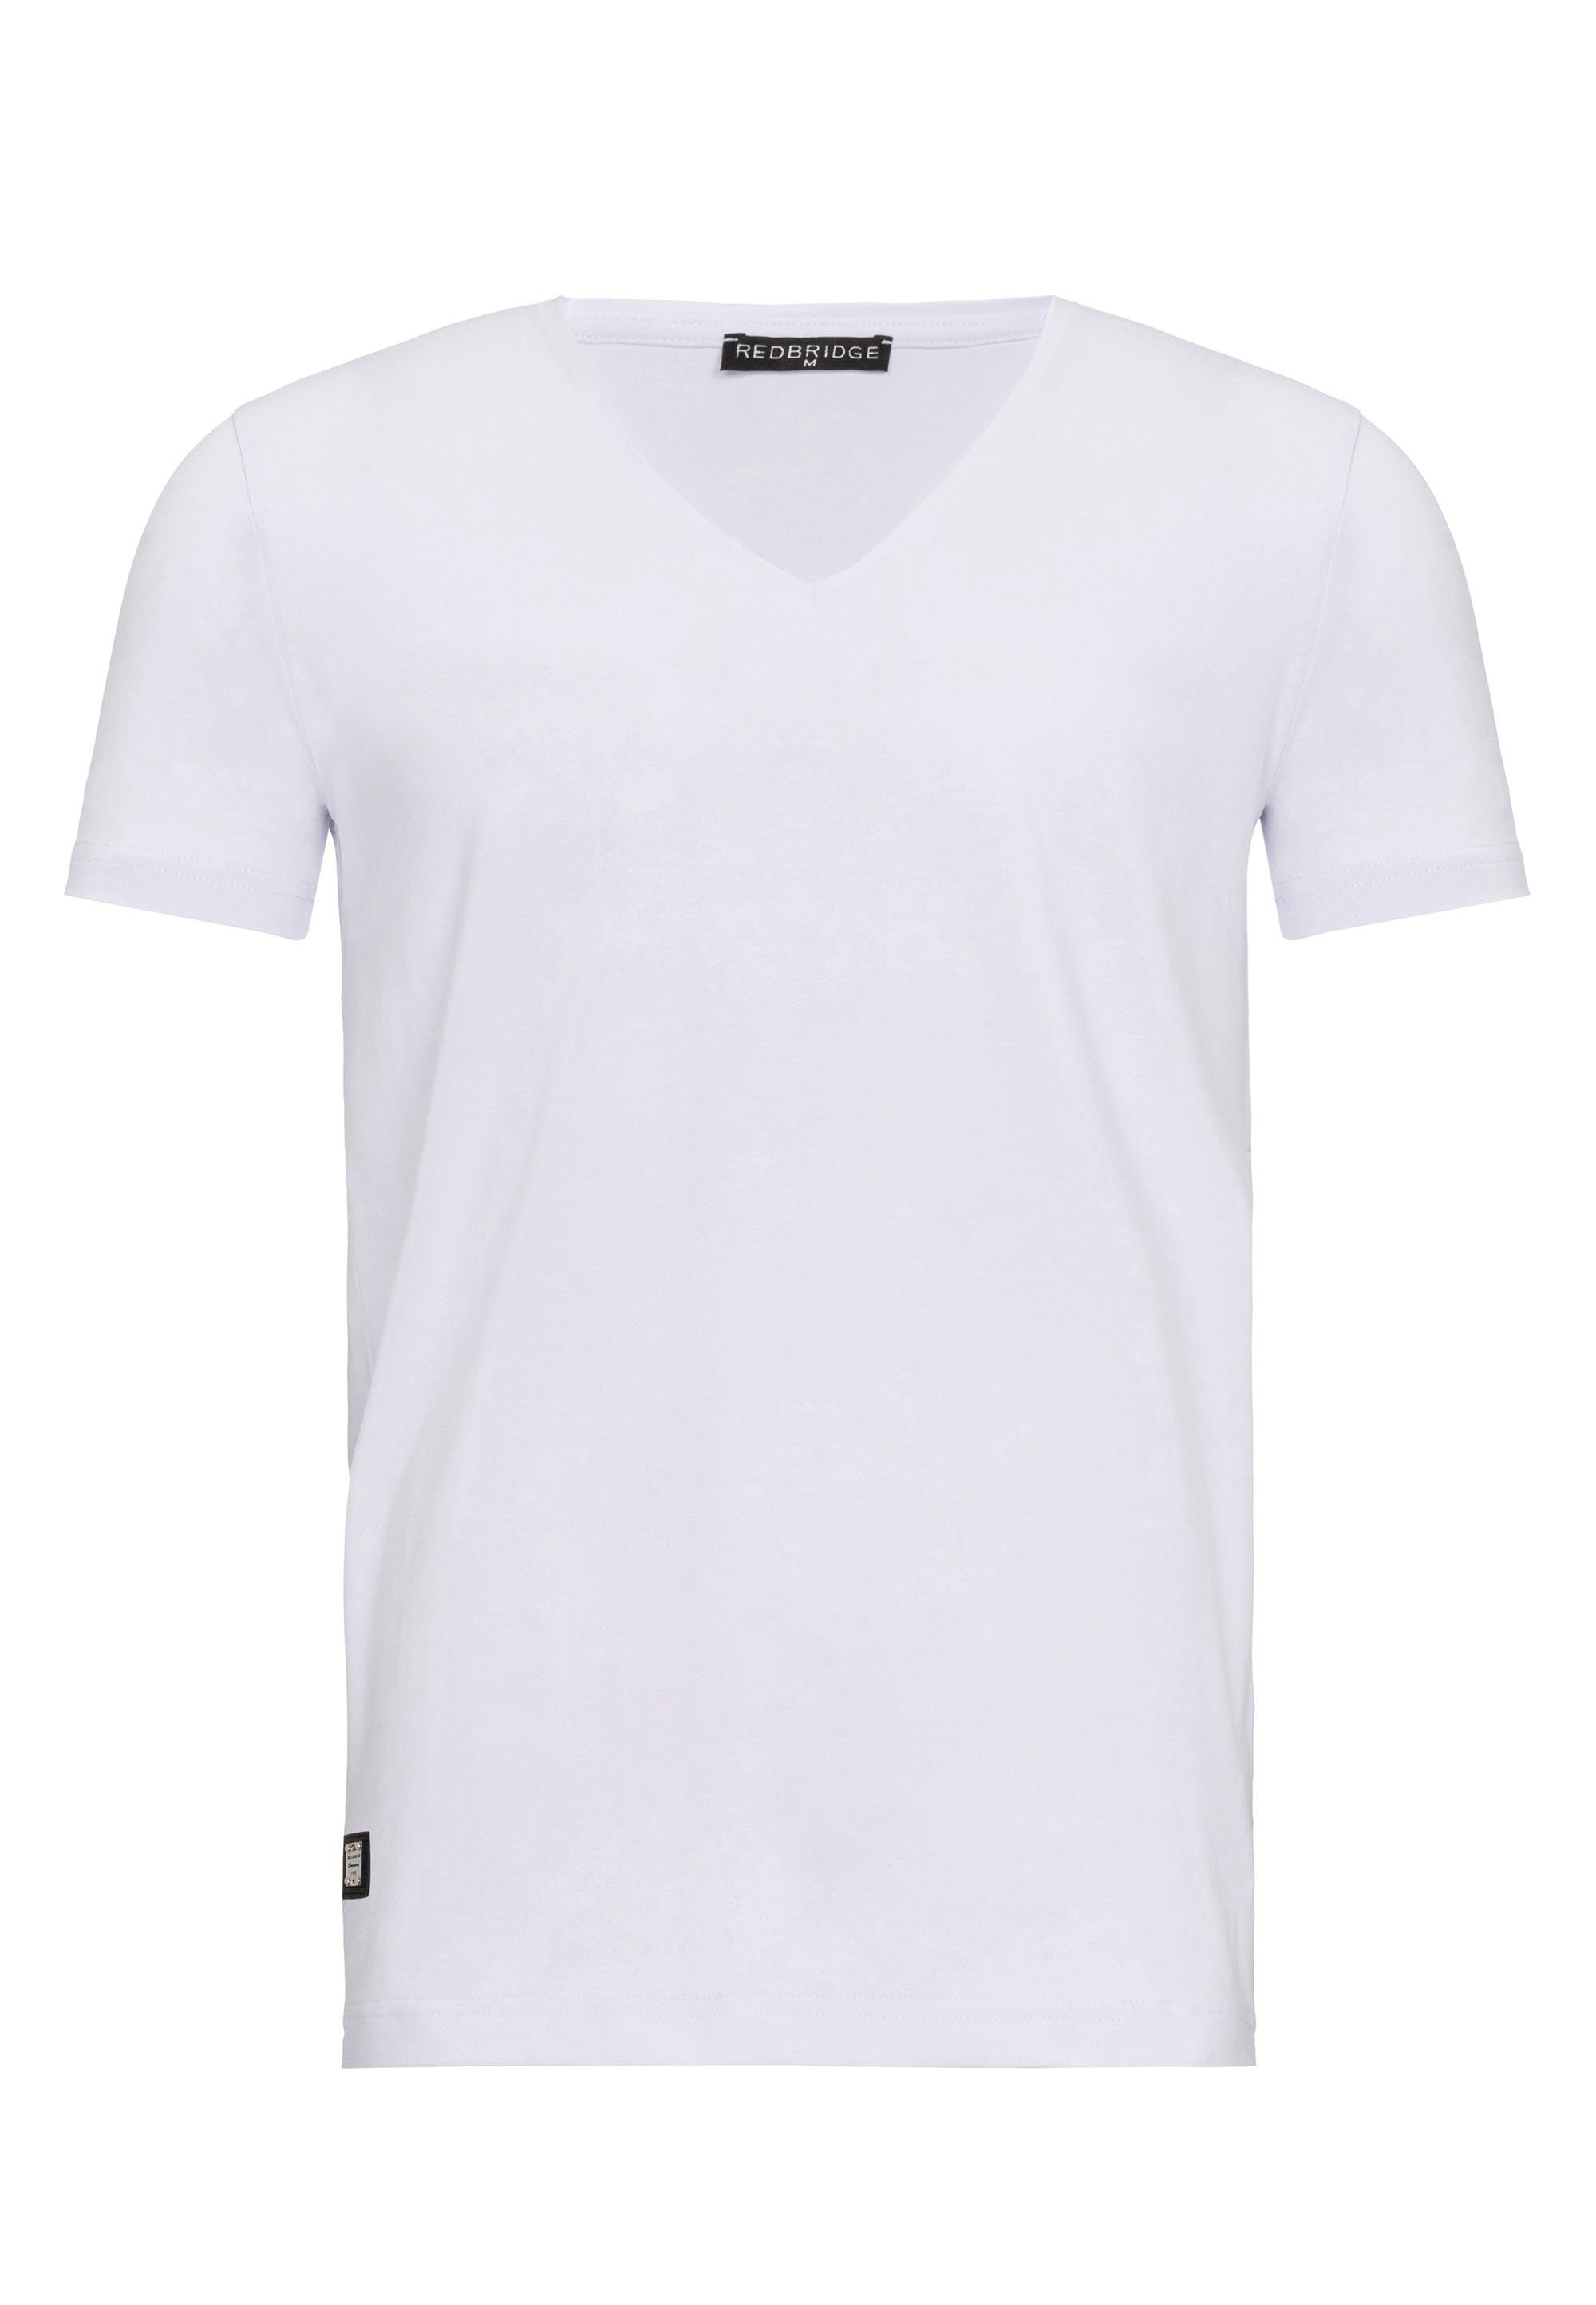 Fullerton aus weiß Logopatch mit basic Metall T-Shirt RedBridge